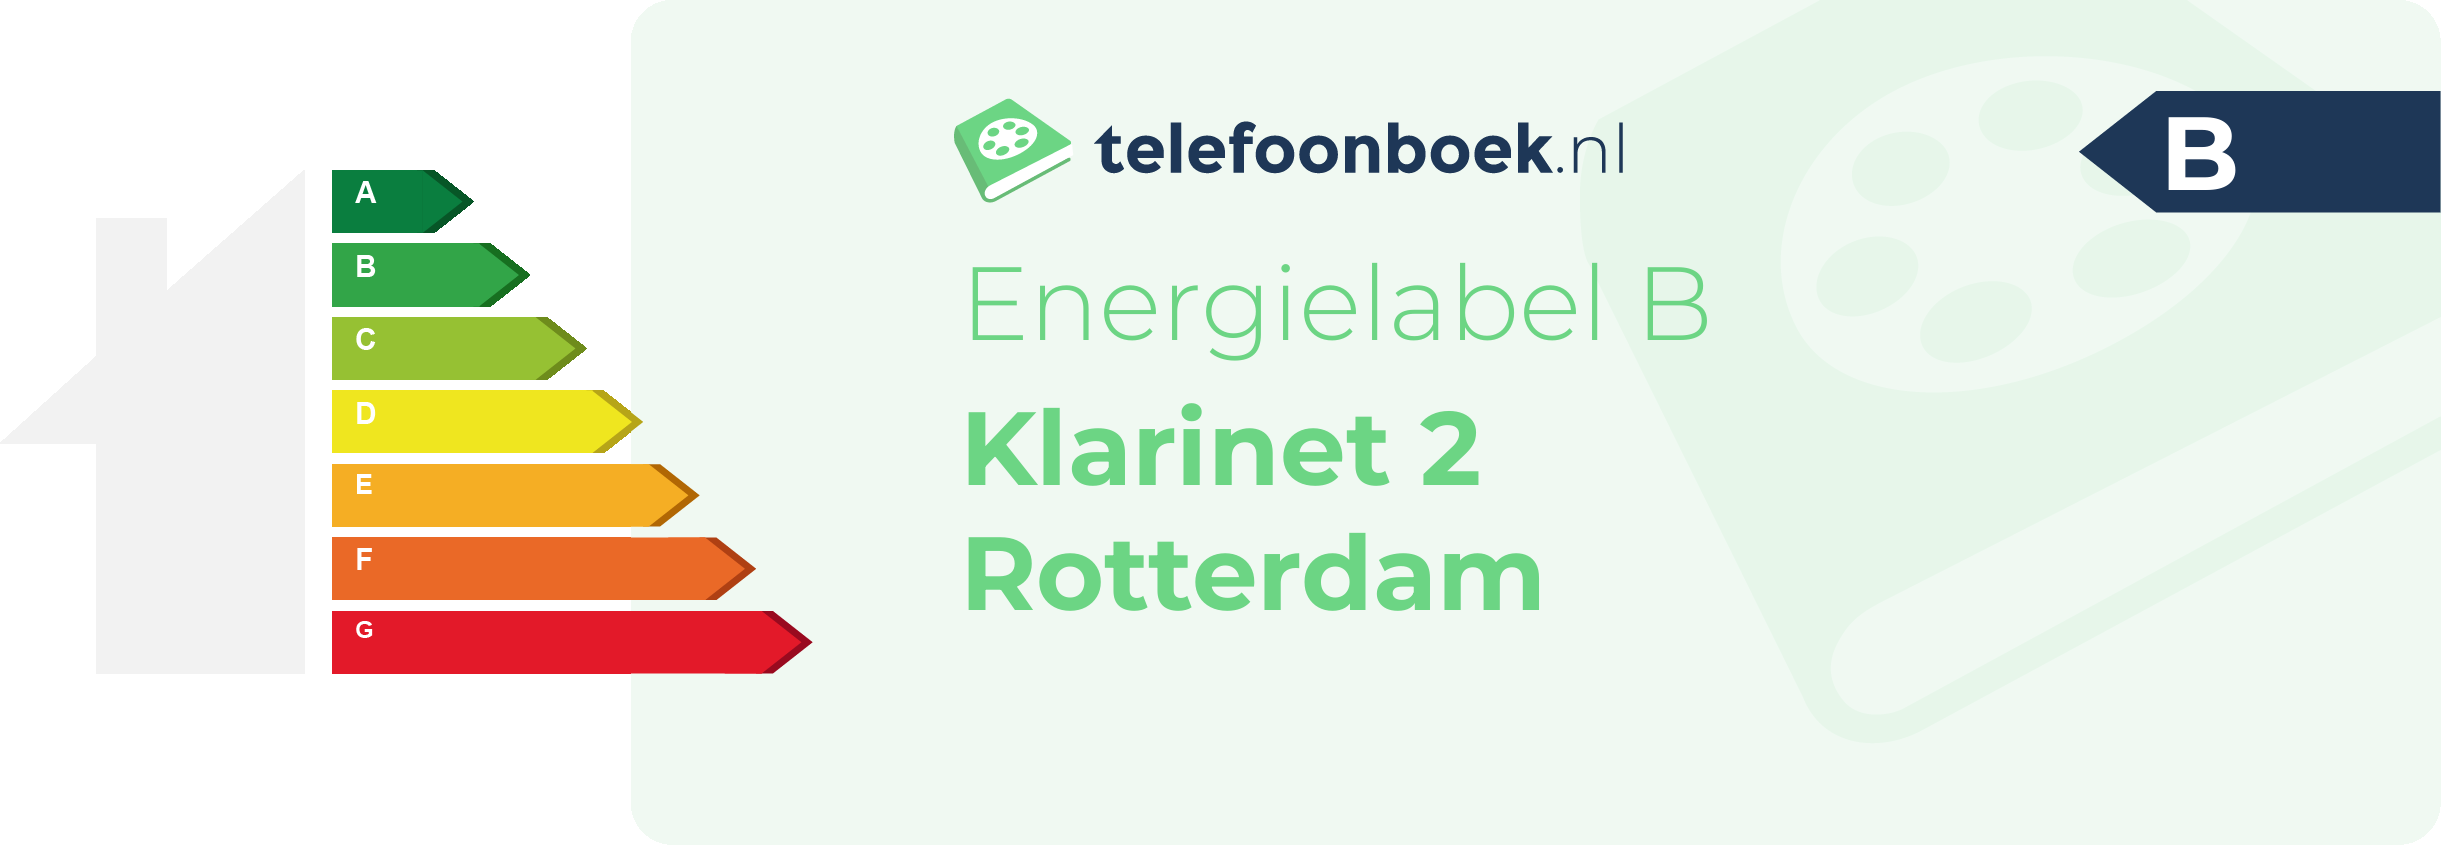 Energielabel Klarinet 2 Rotterdam